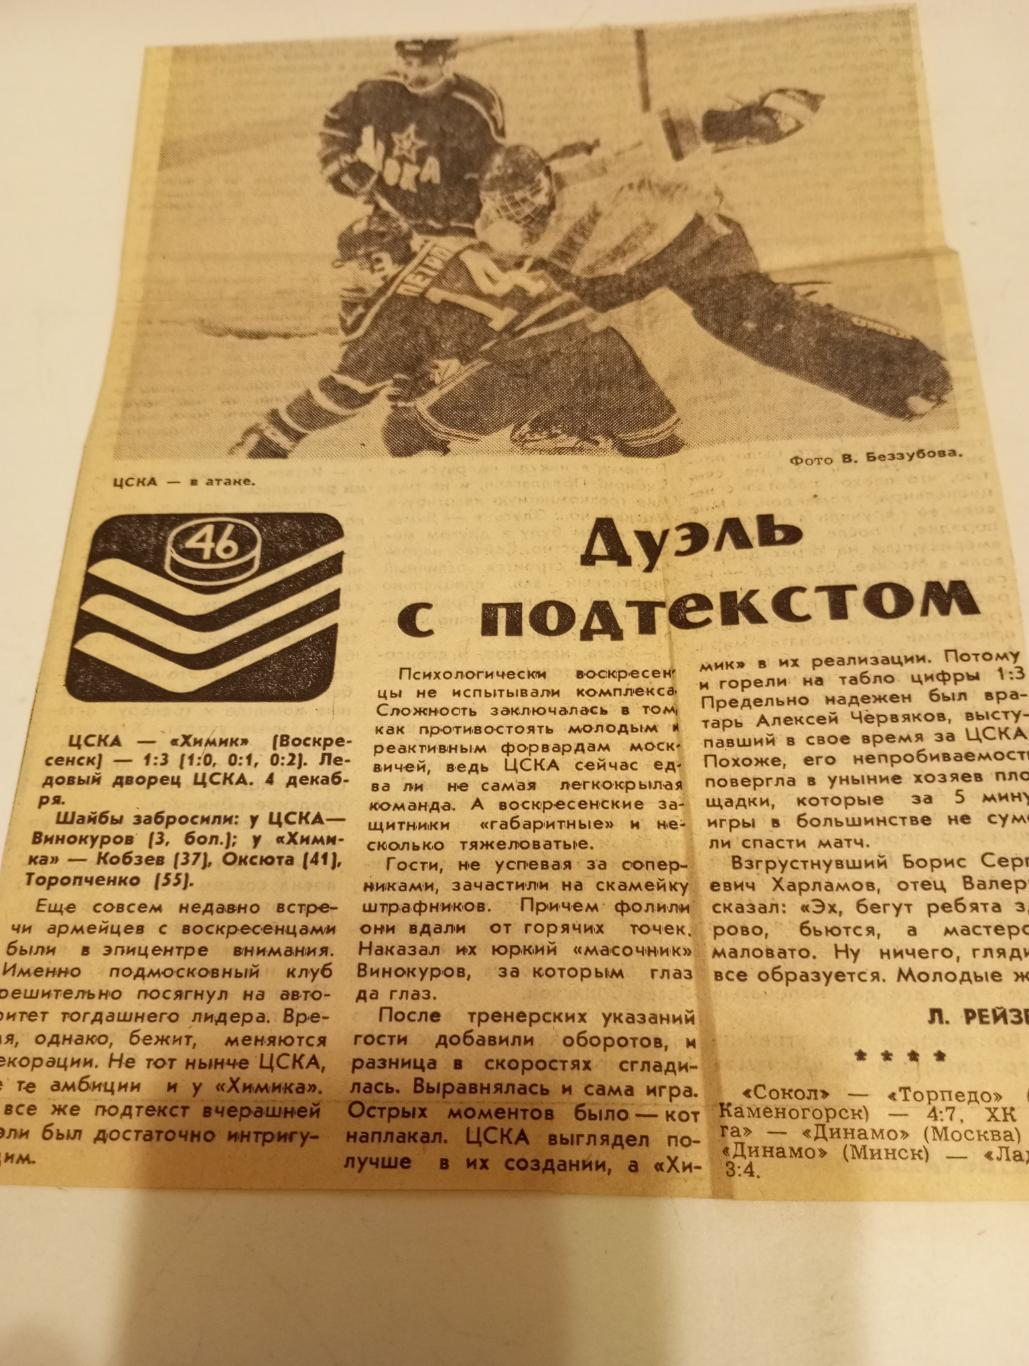 ЦСКА(Москва) - Химик (Воскресенск).4.12.1991. Счёт (1-3)